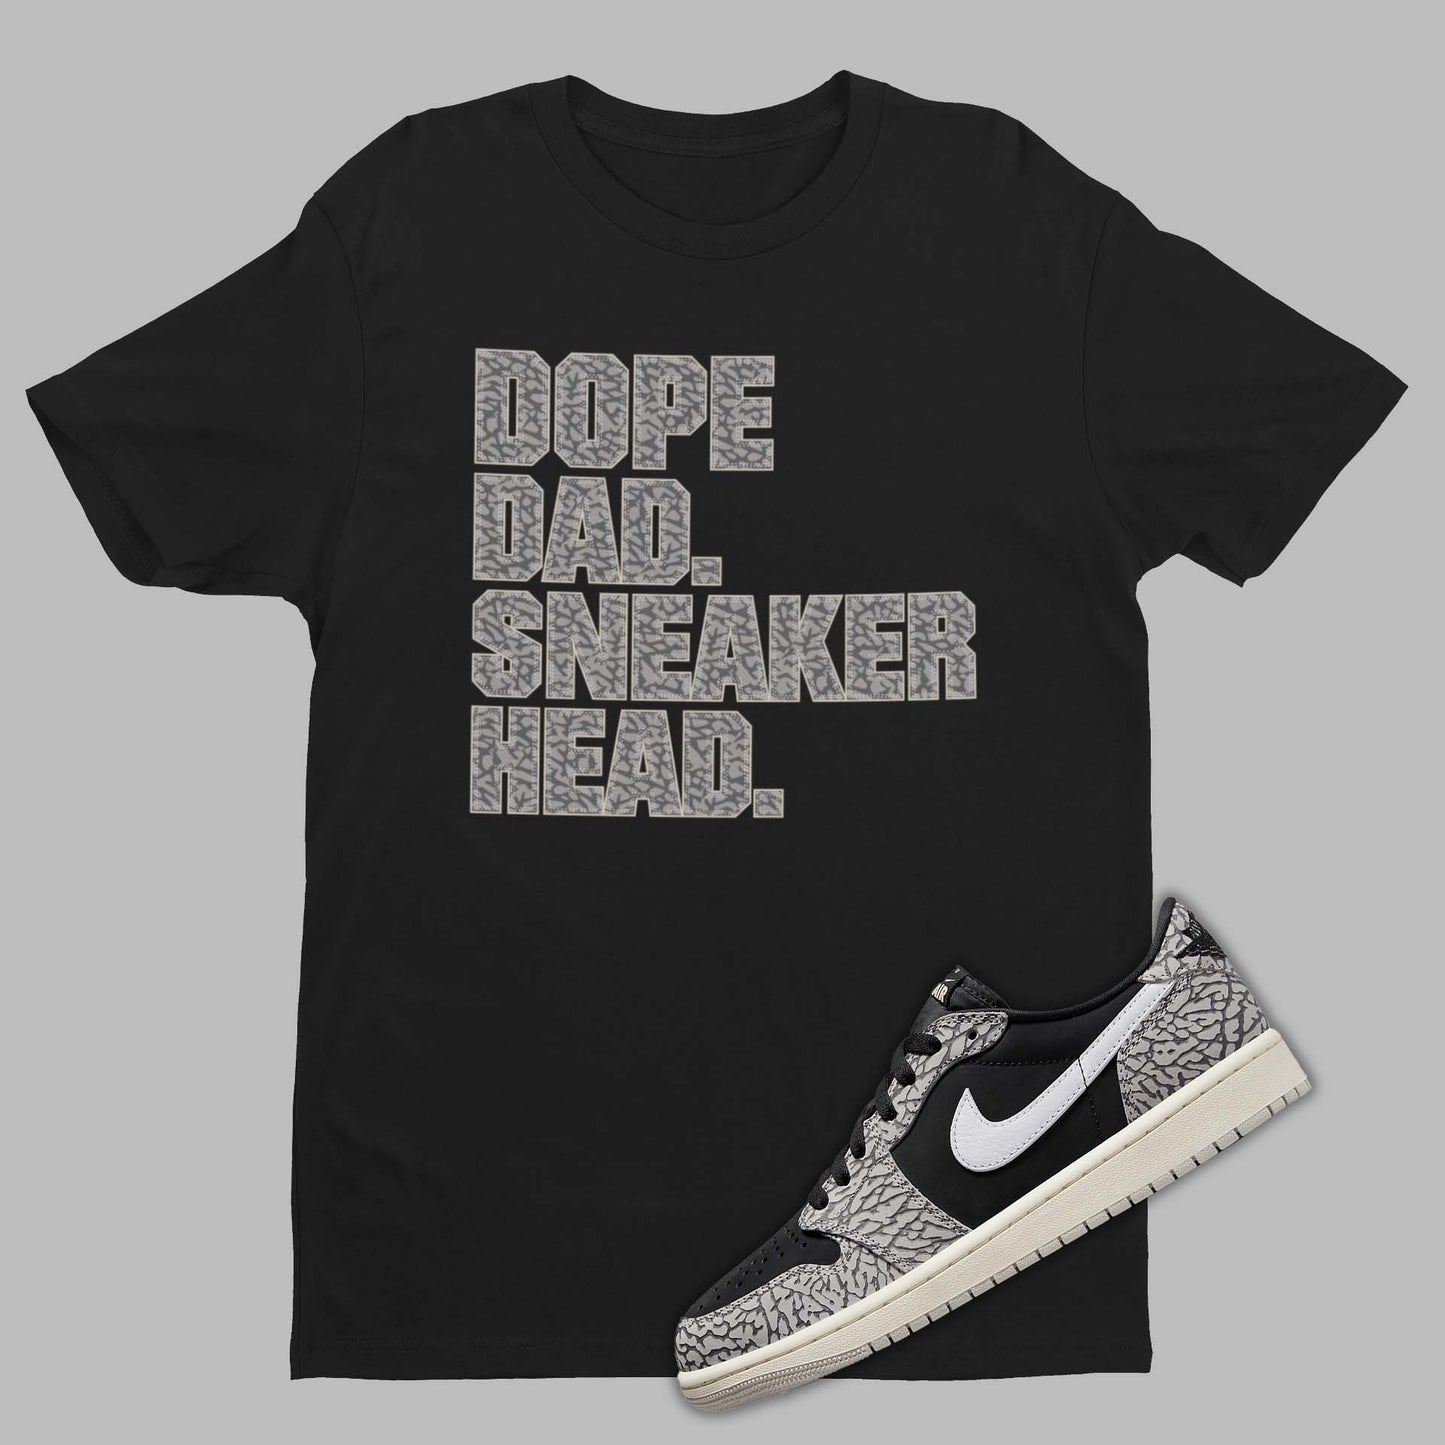 Dope Dad Sneakerhead Shirt Matching Air Jordan 1 Low Black Cement